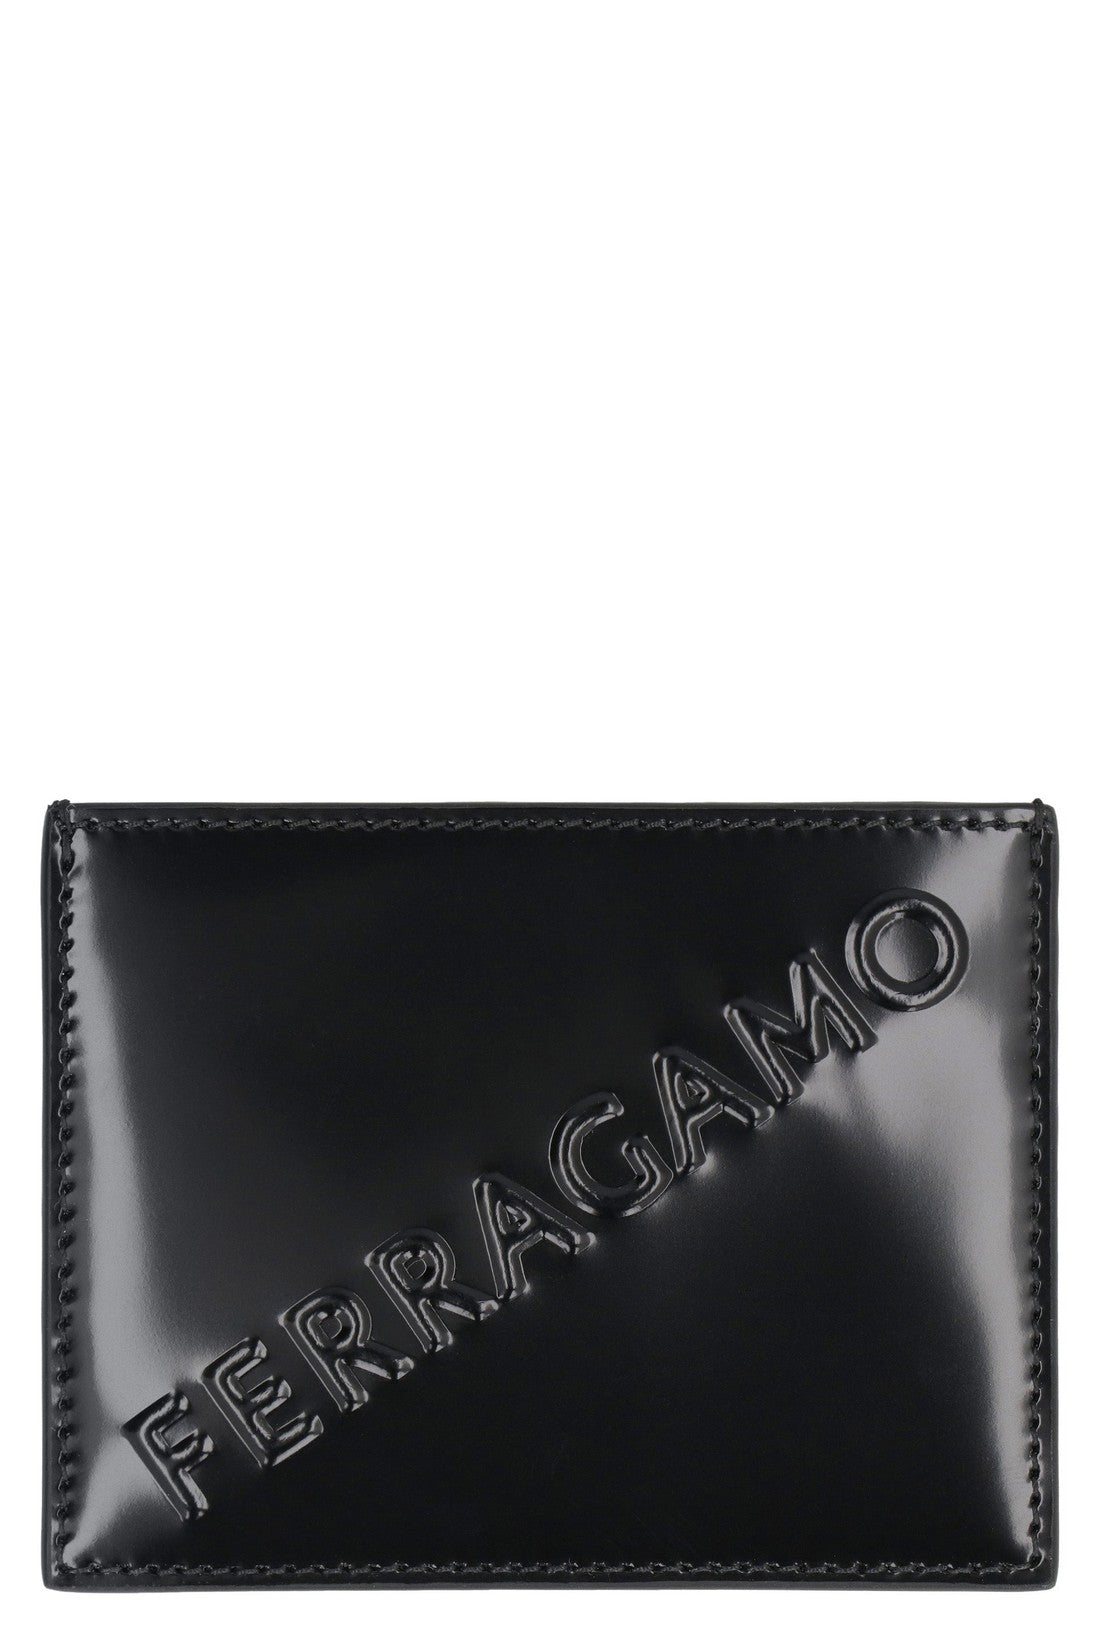 FERRAGAMO-OUTLET-SALE-Leather card holder-ARCHIVIST